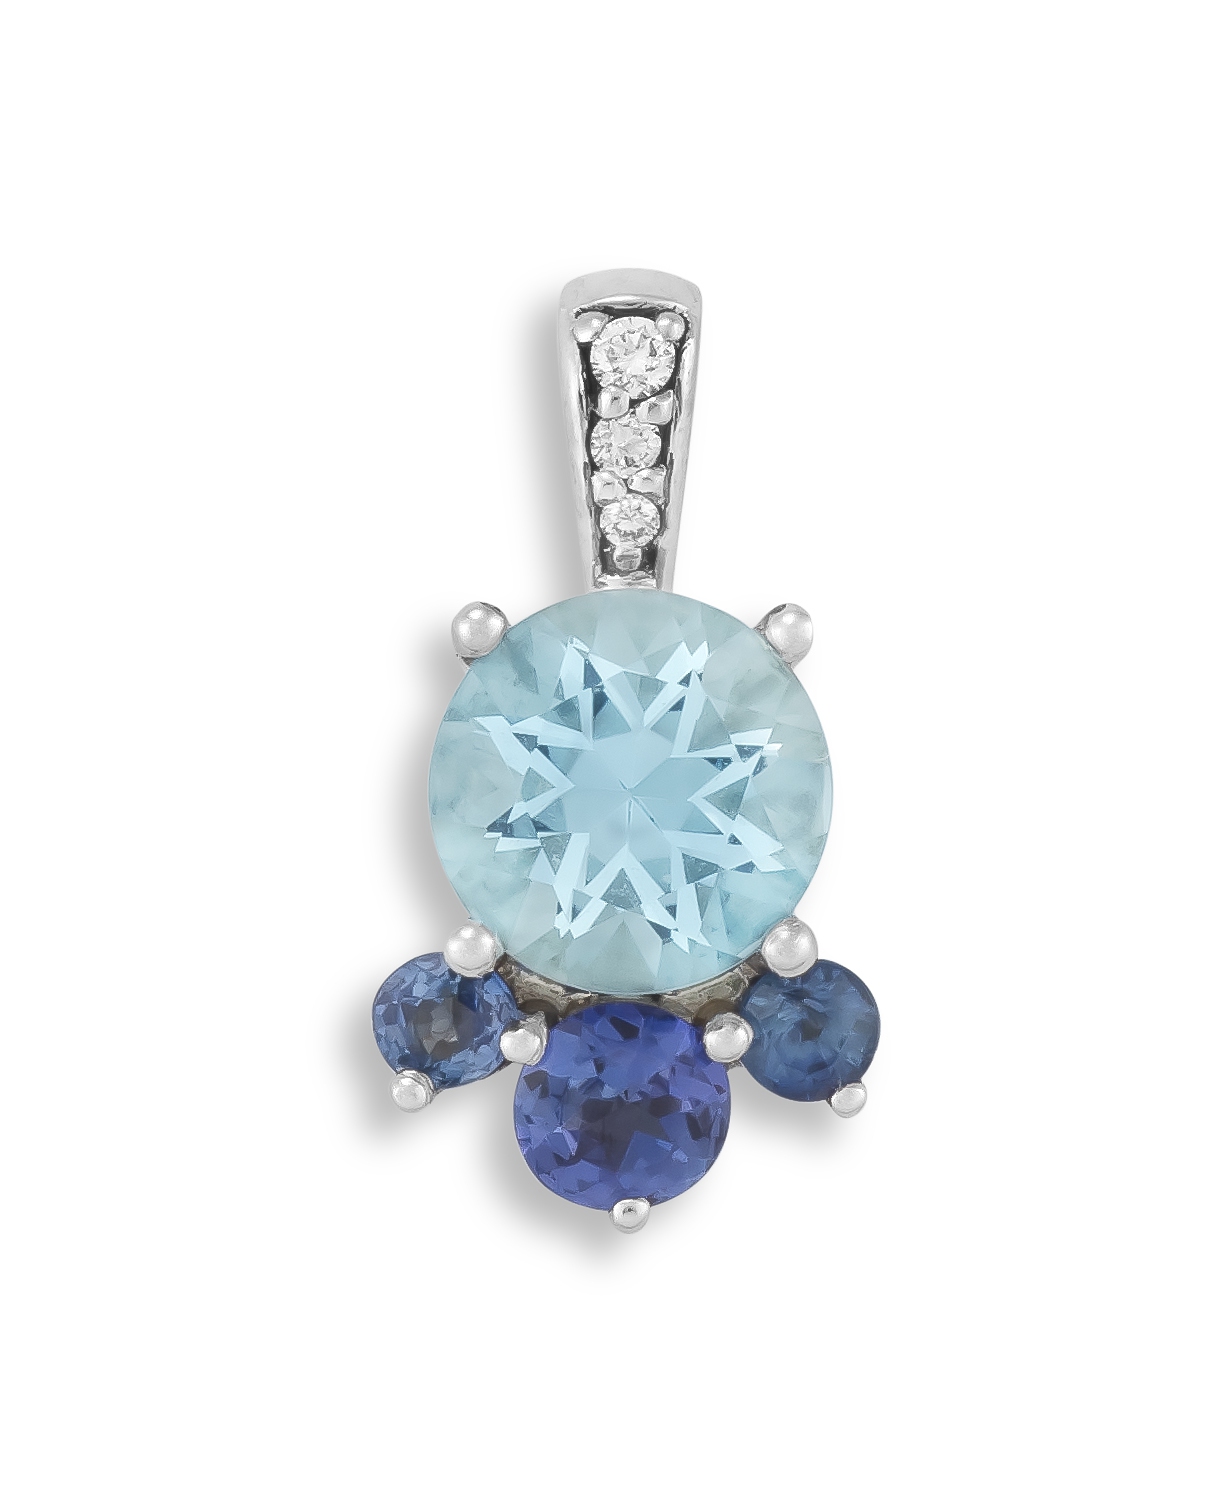 Aquamarine, sapphire, tanzanite and diamond pendant, designed by Taz Watson